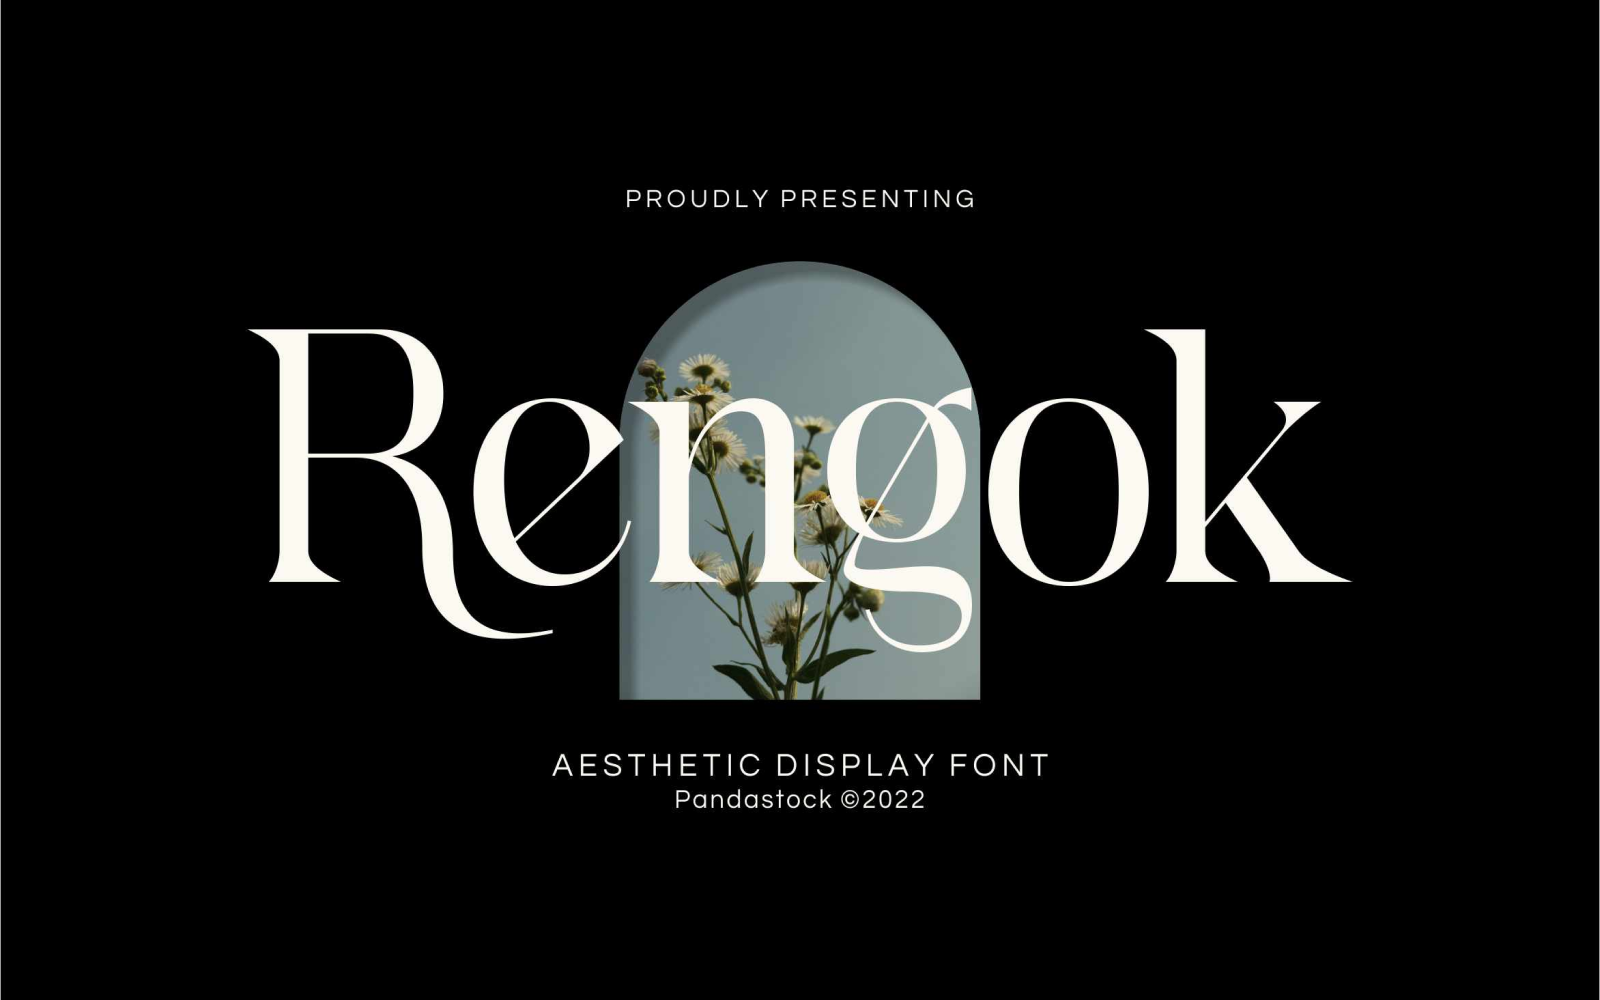 Rengok Aesthetic Display Font